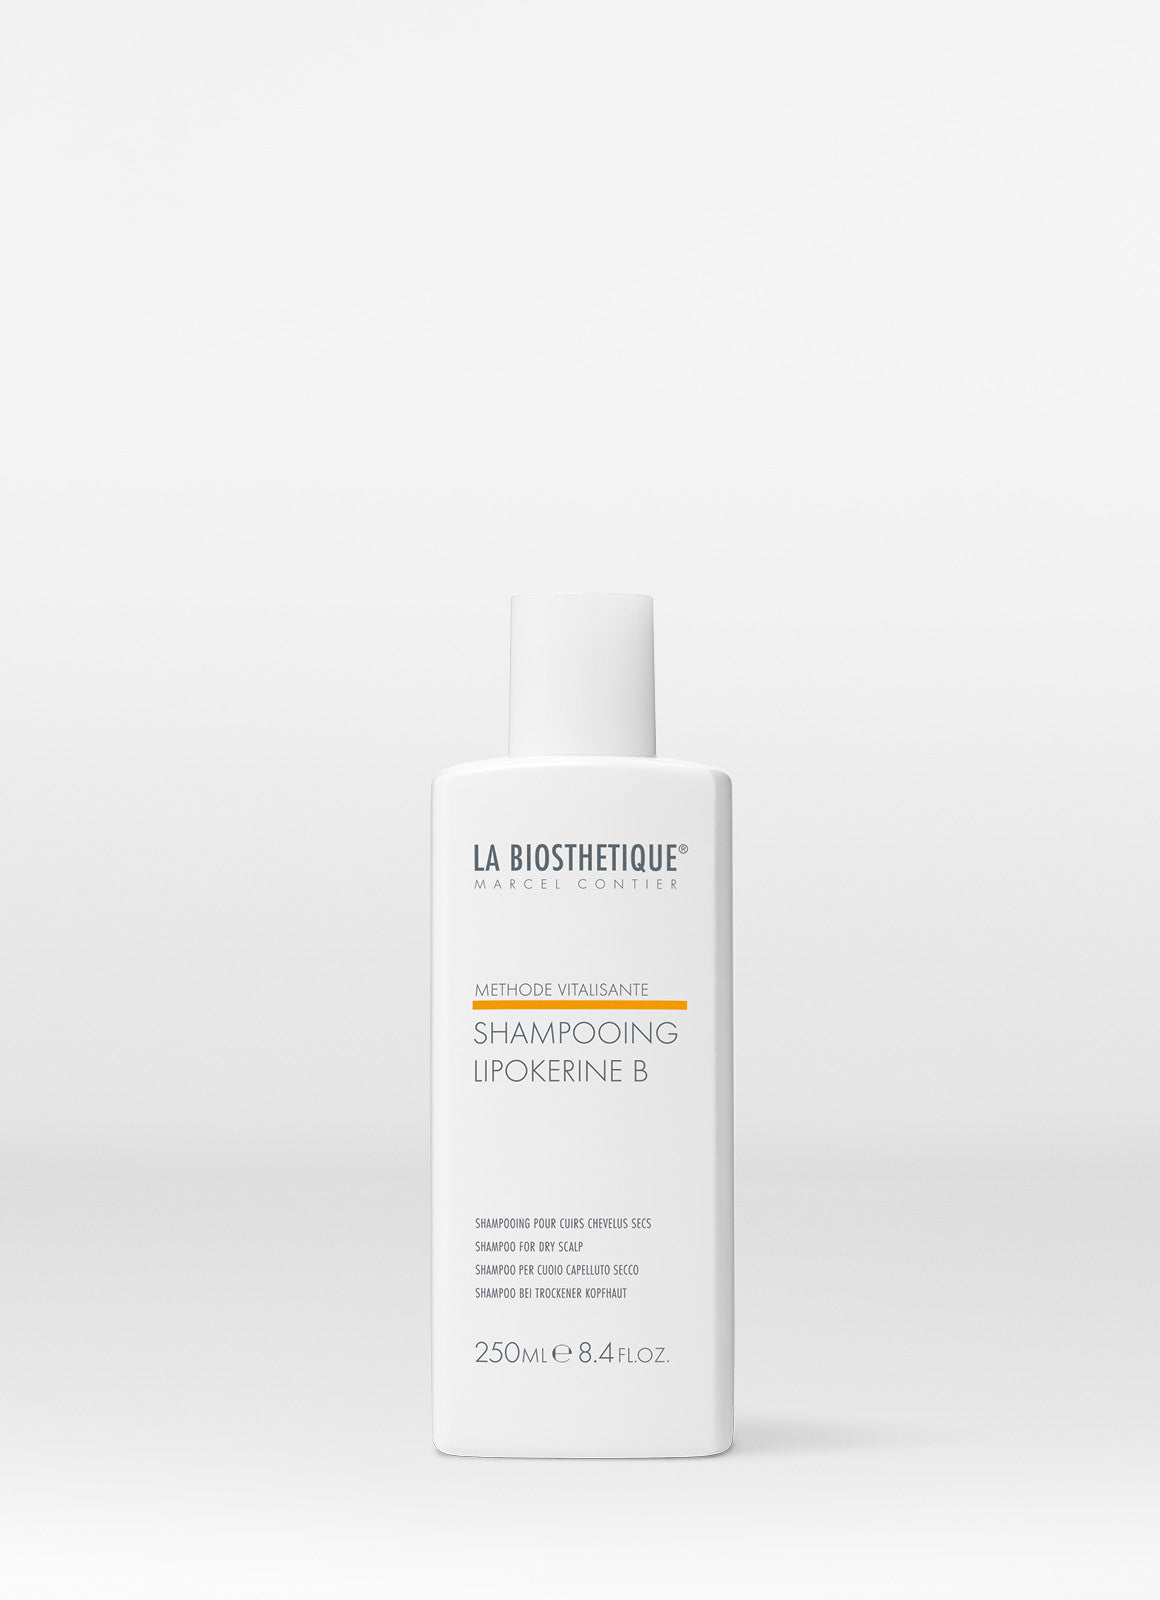 Shampoo Lipokerine B (dry scalp)